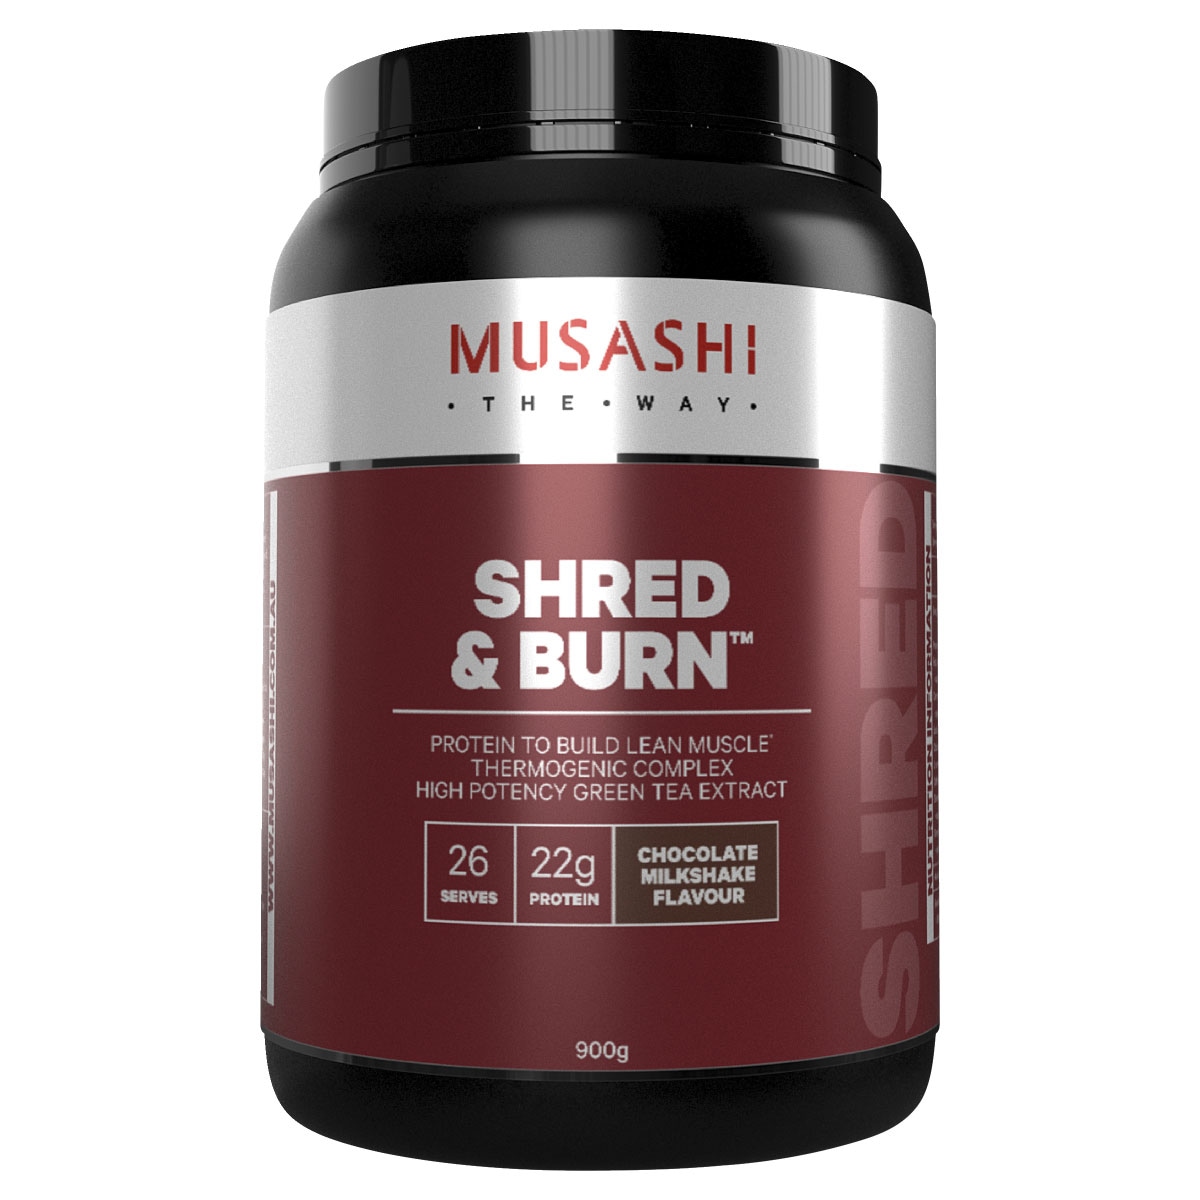 Musashi Shred & Burn Protein Chocolate Milkshake 900g Australia